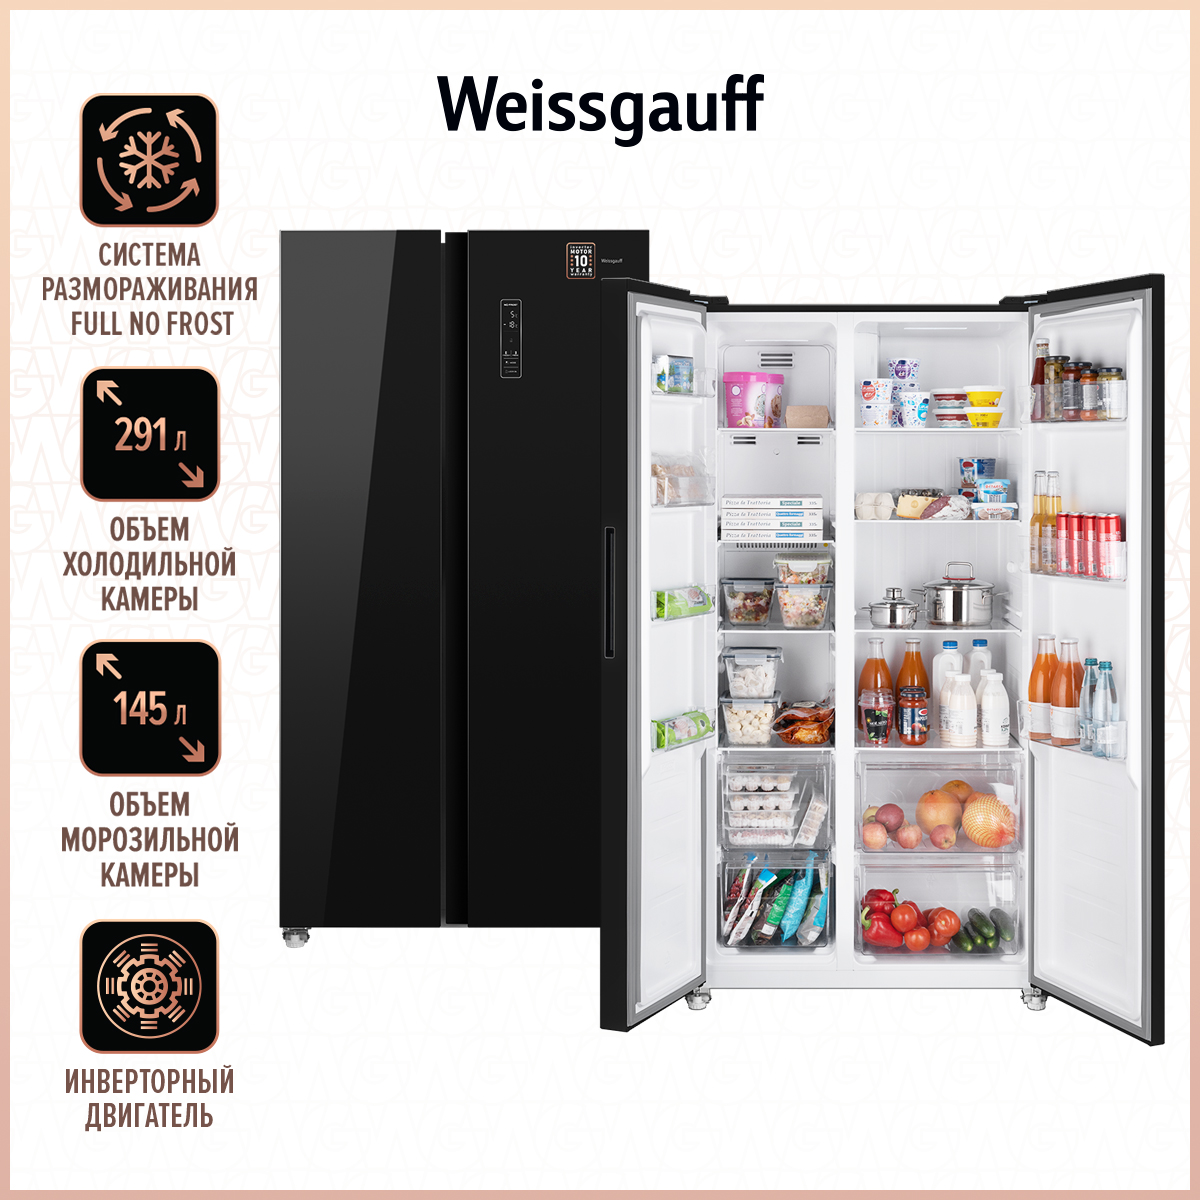 Холодильник Weissgauff WSBS 500 NFB черный холодильник weissgauff wsbs 695 nfx серебристый